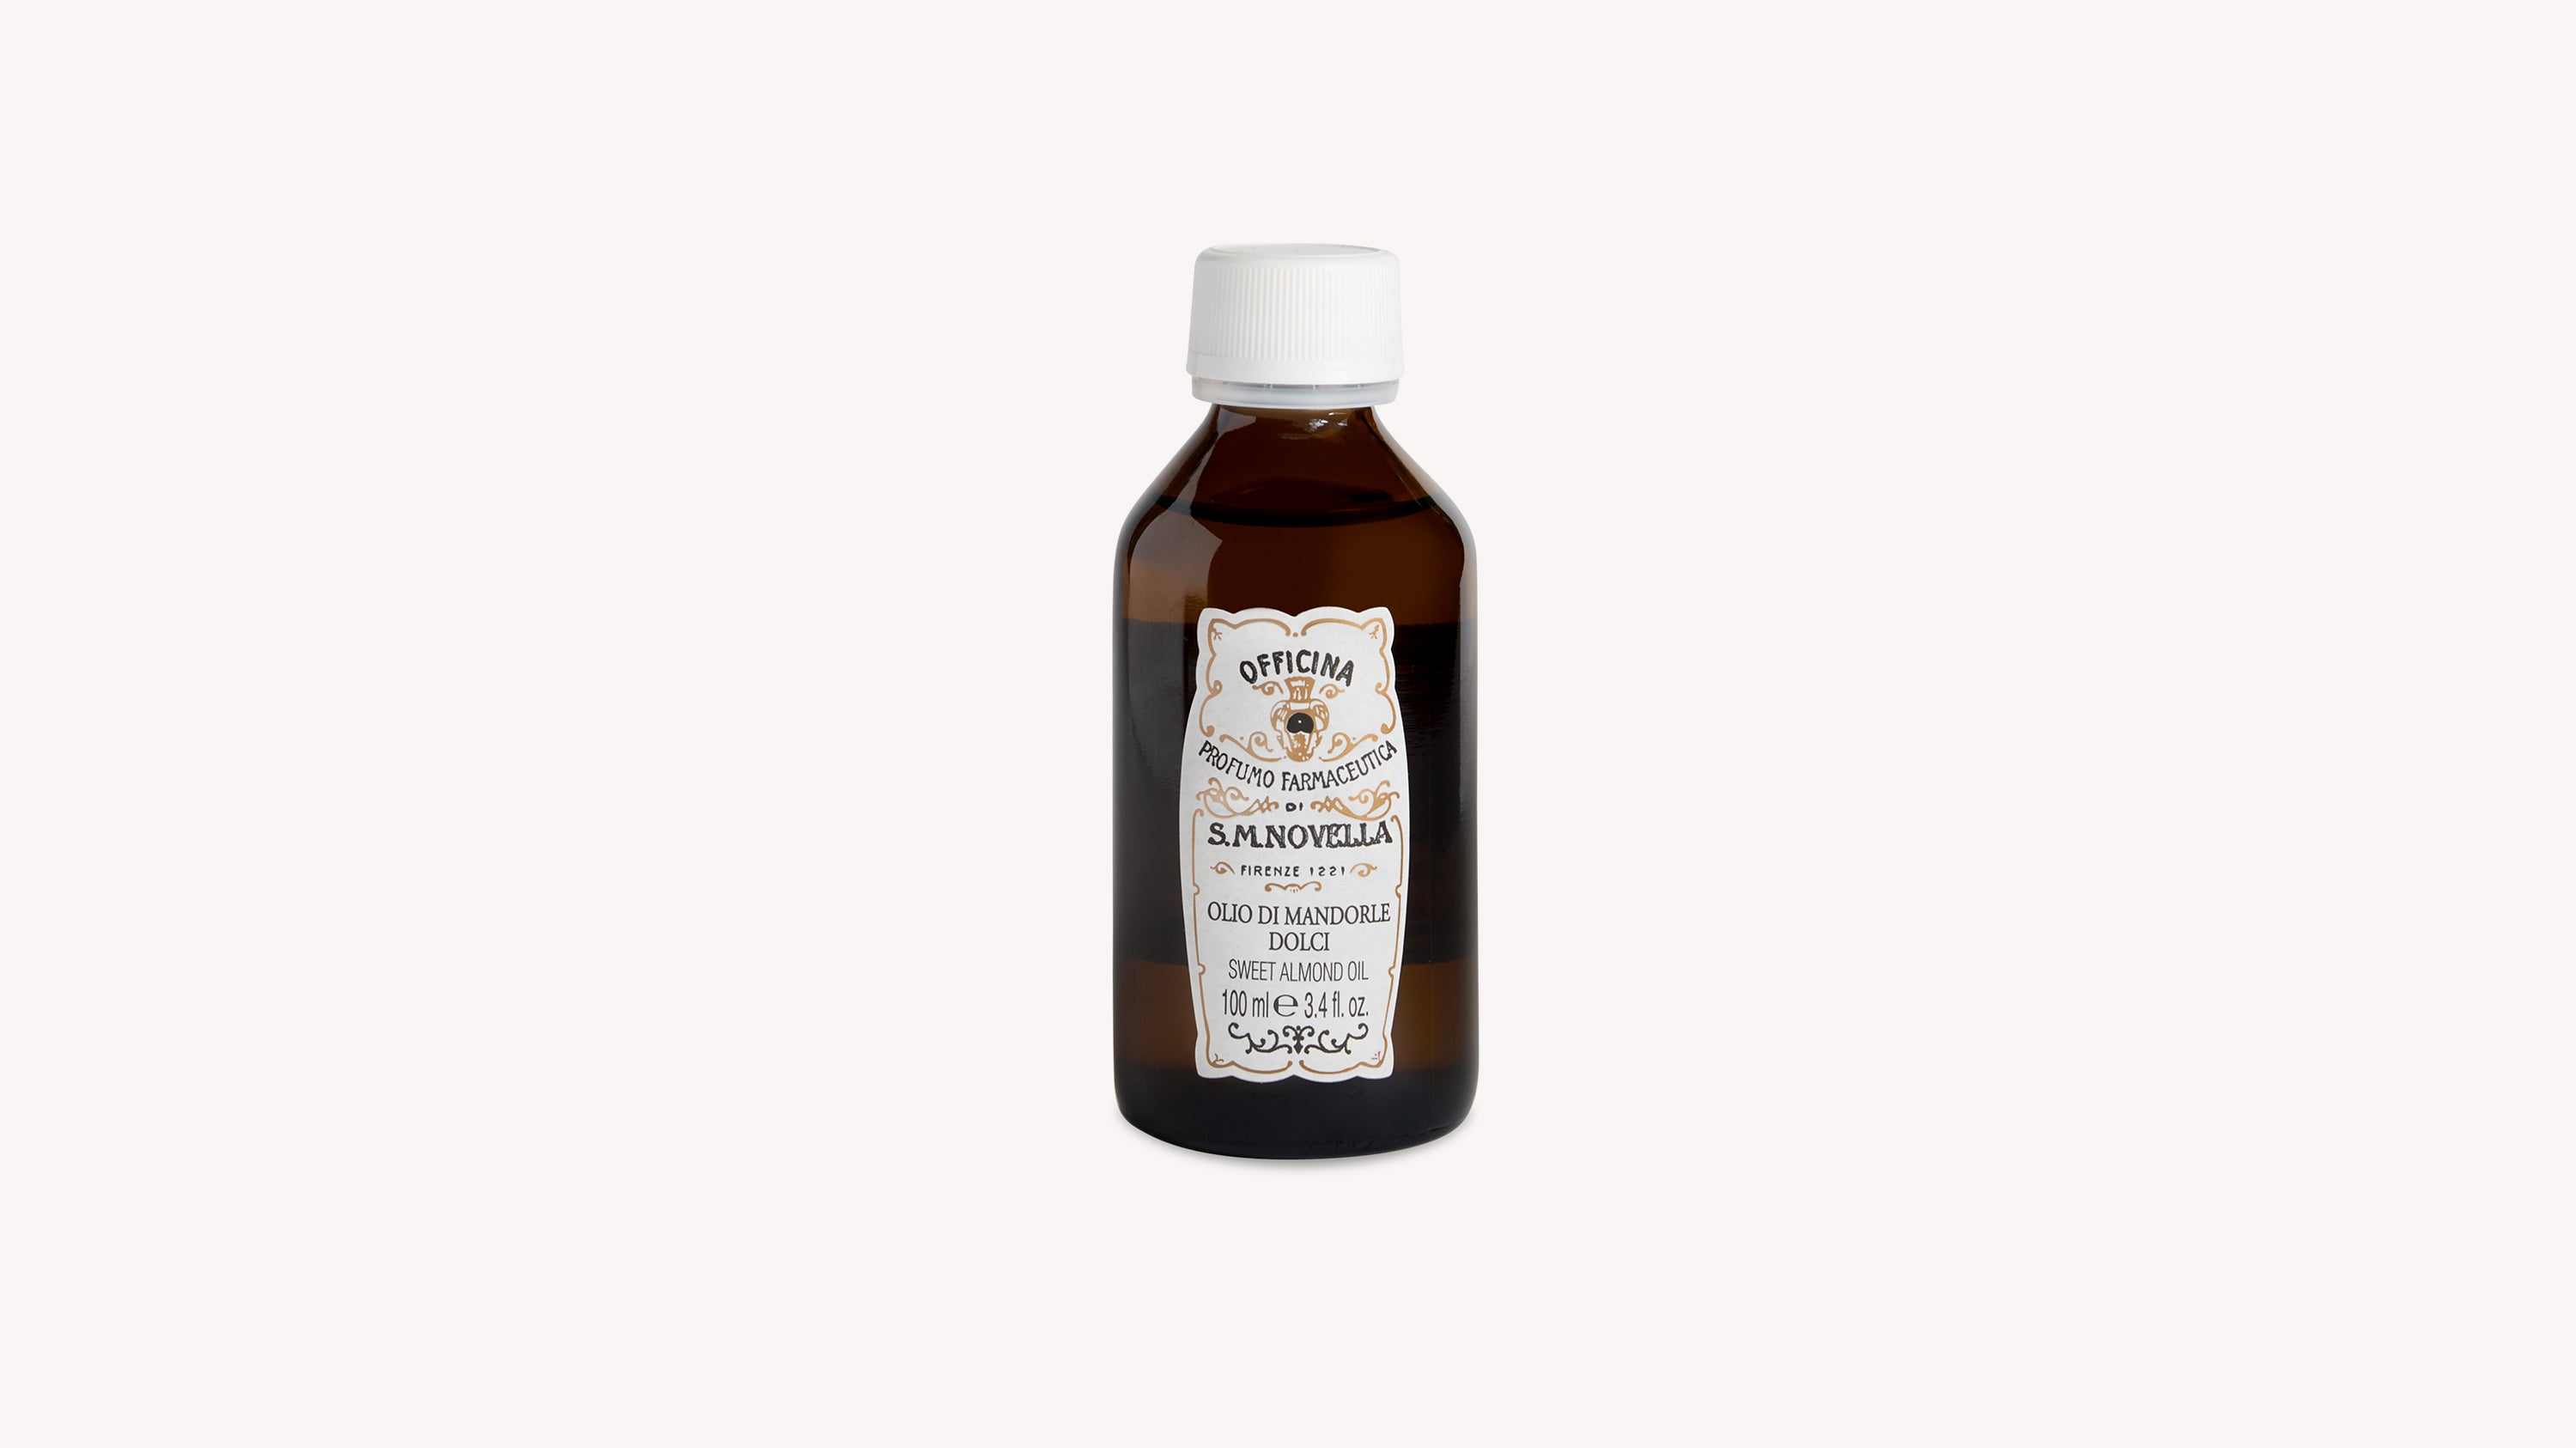 Sweet Almond Oil Body Care officina-smn-usa-ca.myshopify.com Officina Profumo Farmaceutica di Santa Maria Novella - US